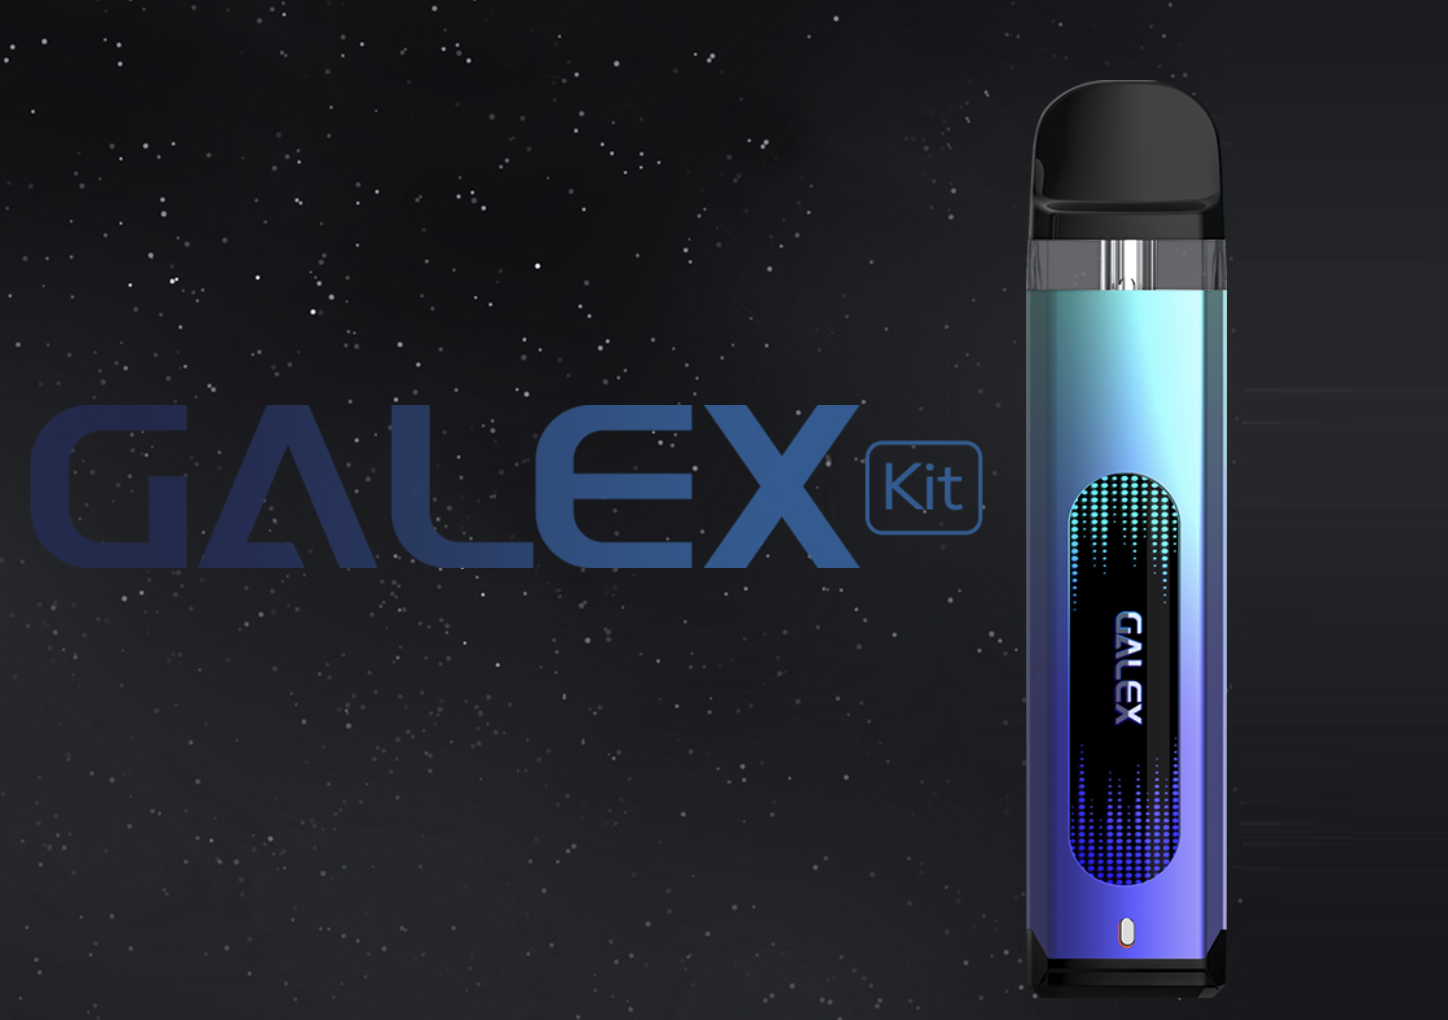 Freemax Galex POD kit - «полярное сияние»…